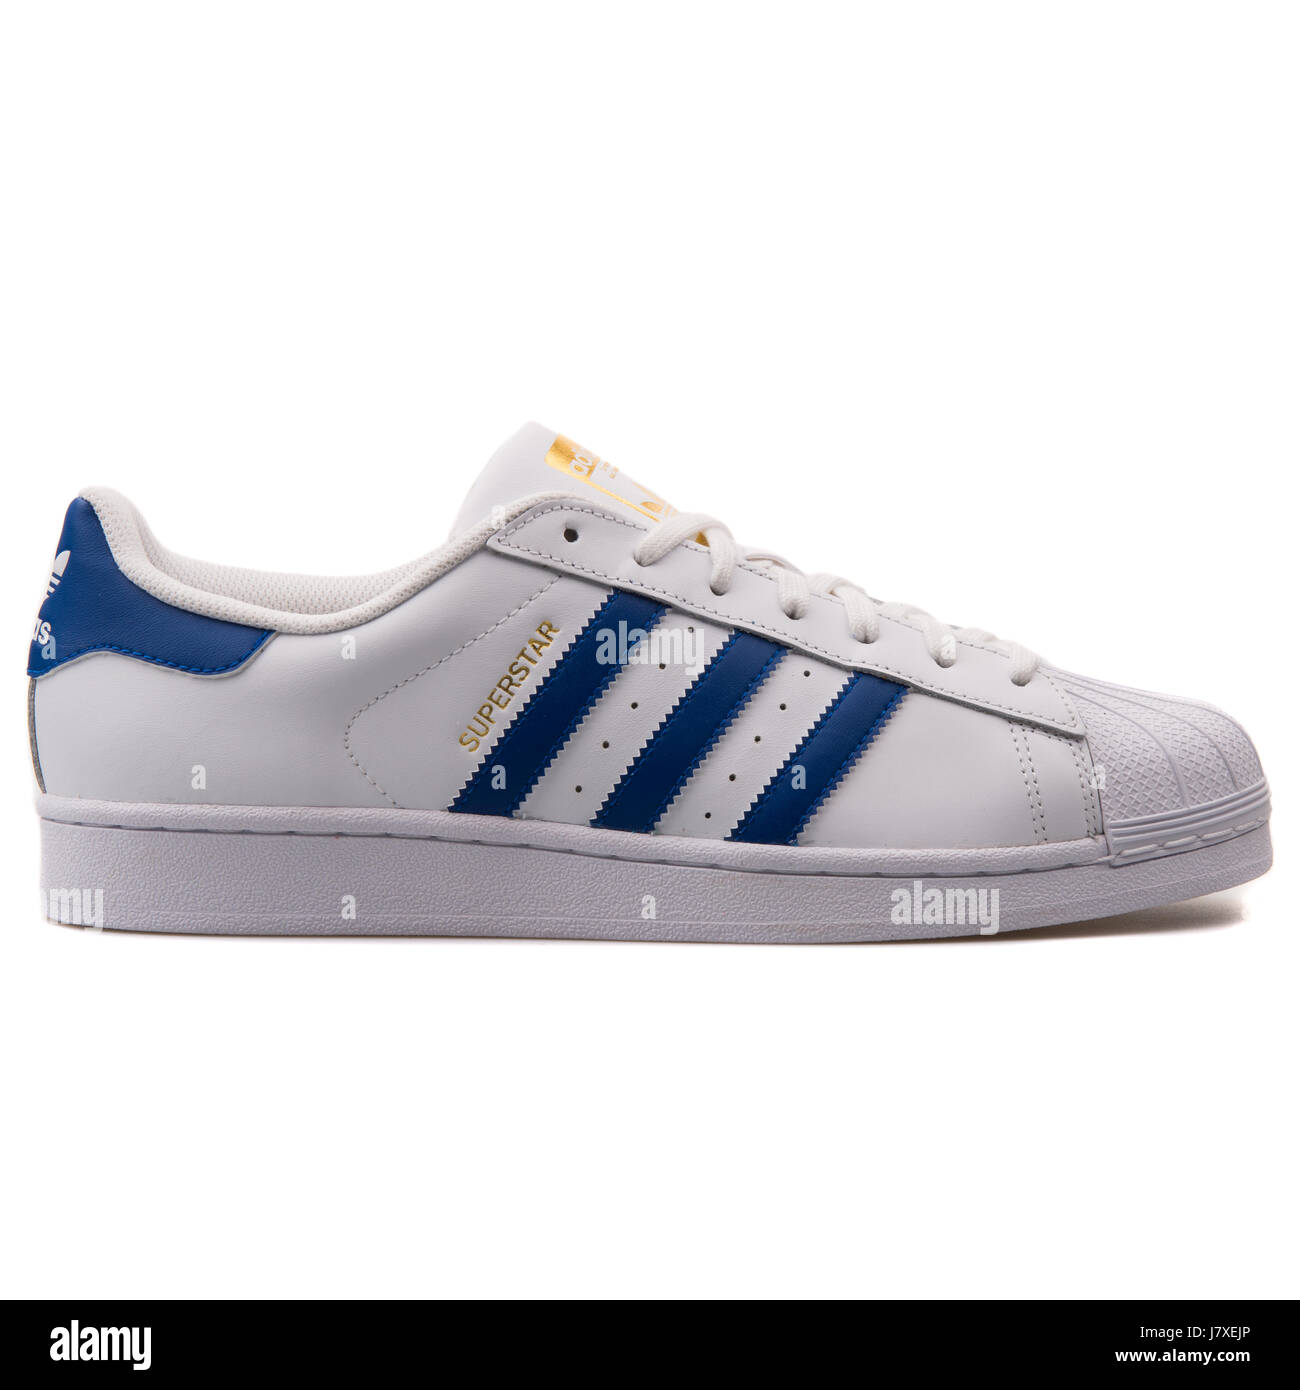 Adidas Superstar Foundation uomo in pelle bianca con Blue Sneakers - B27141  Foto stock - Alamy